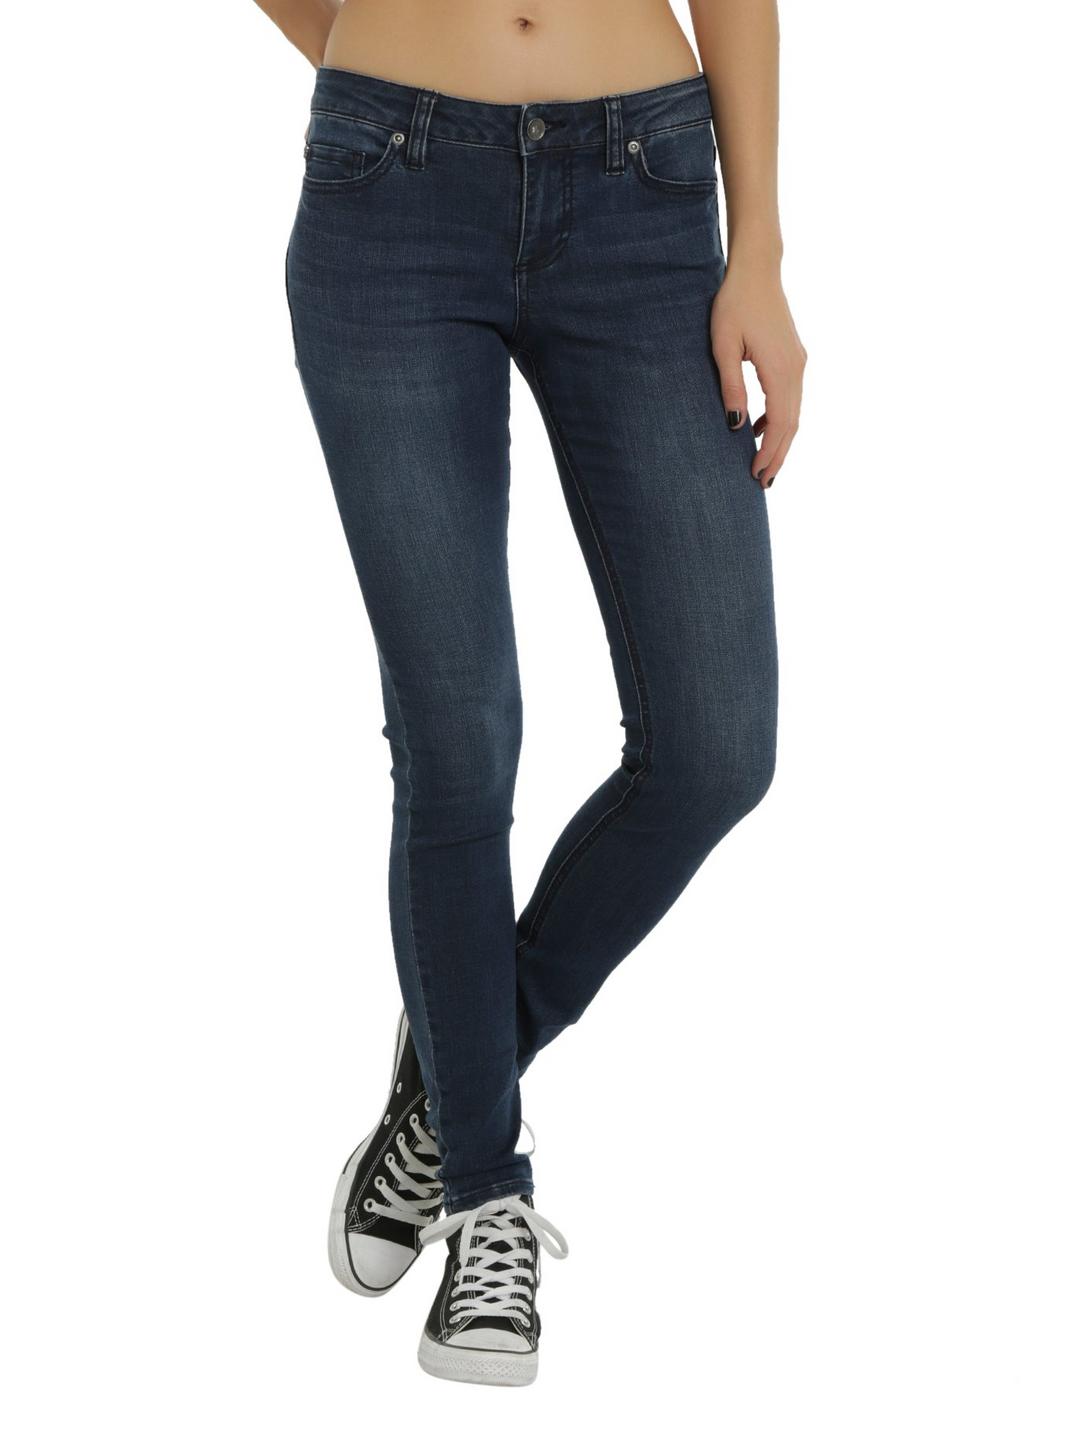 Blackheart Medium Indigo Skinny Jeans, BLUE, hi-res